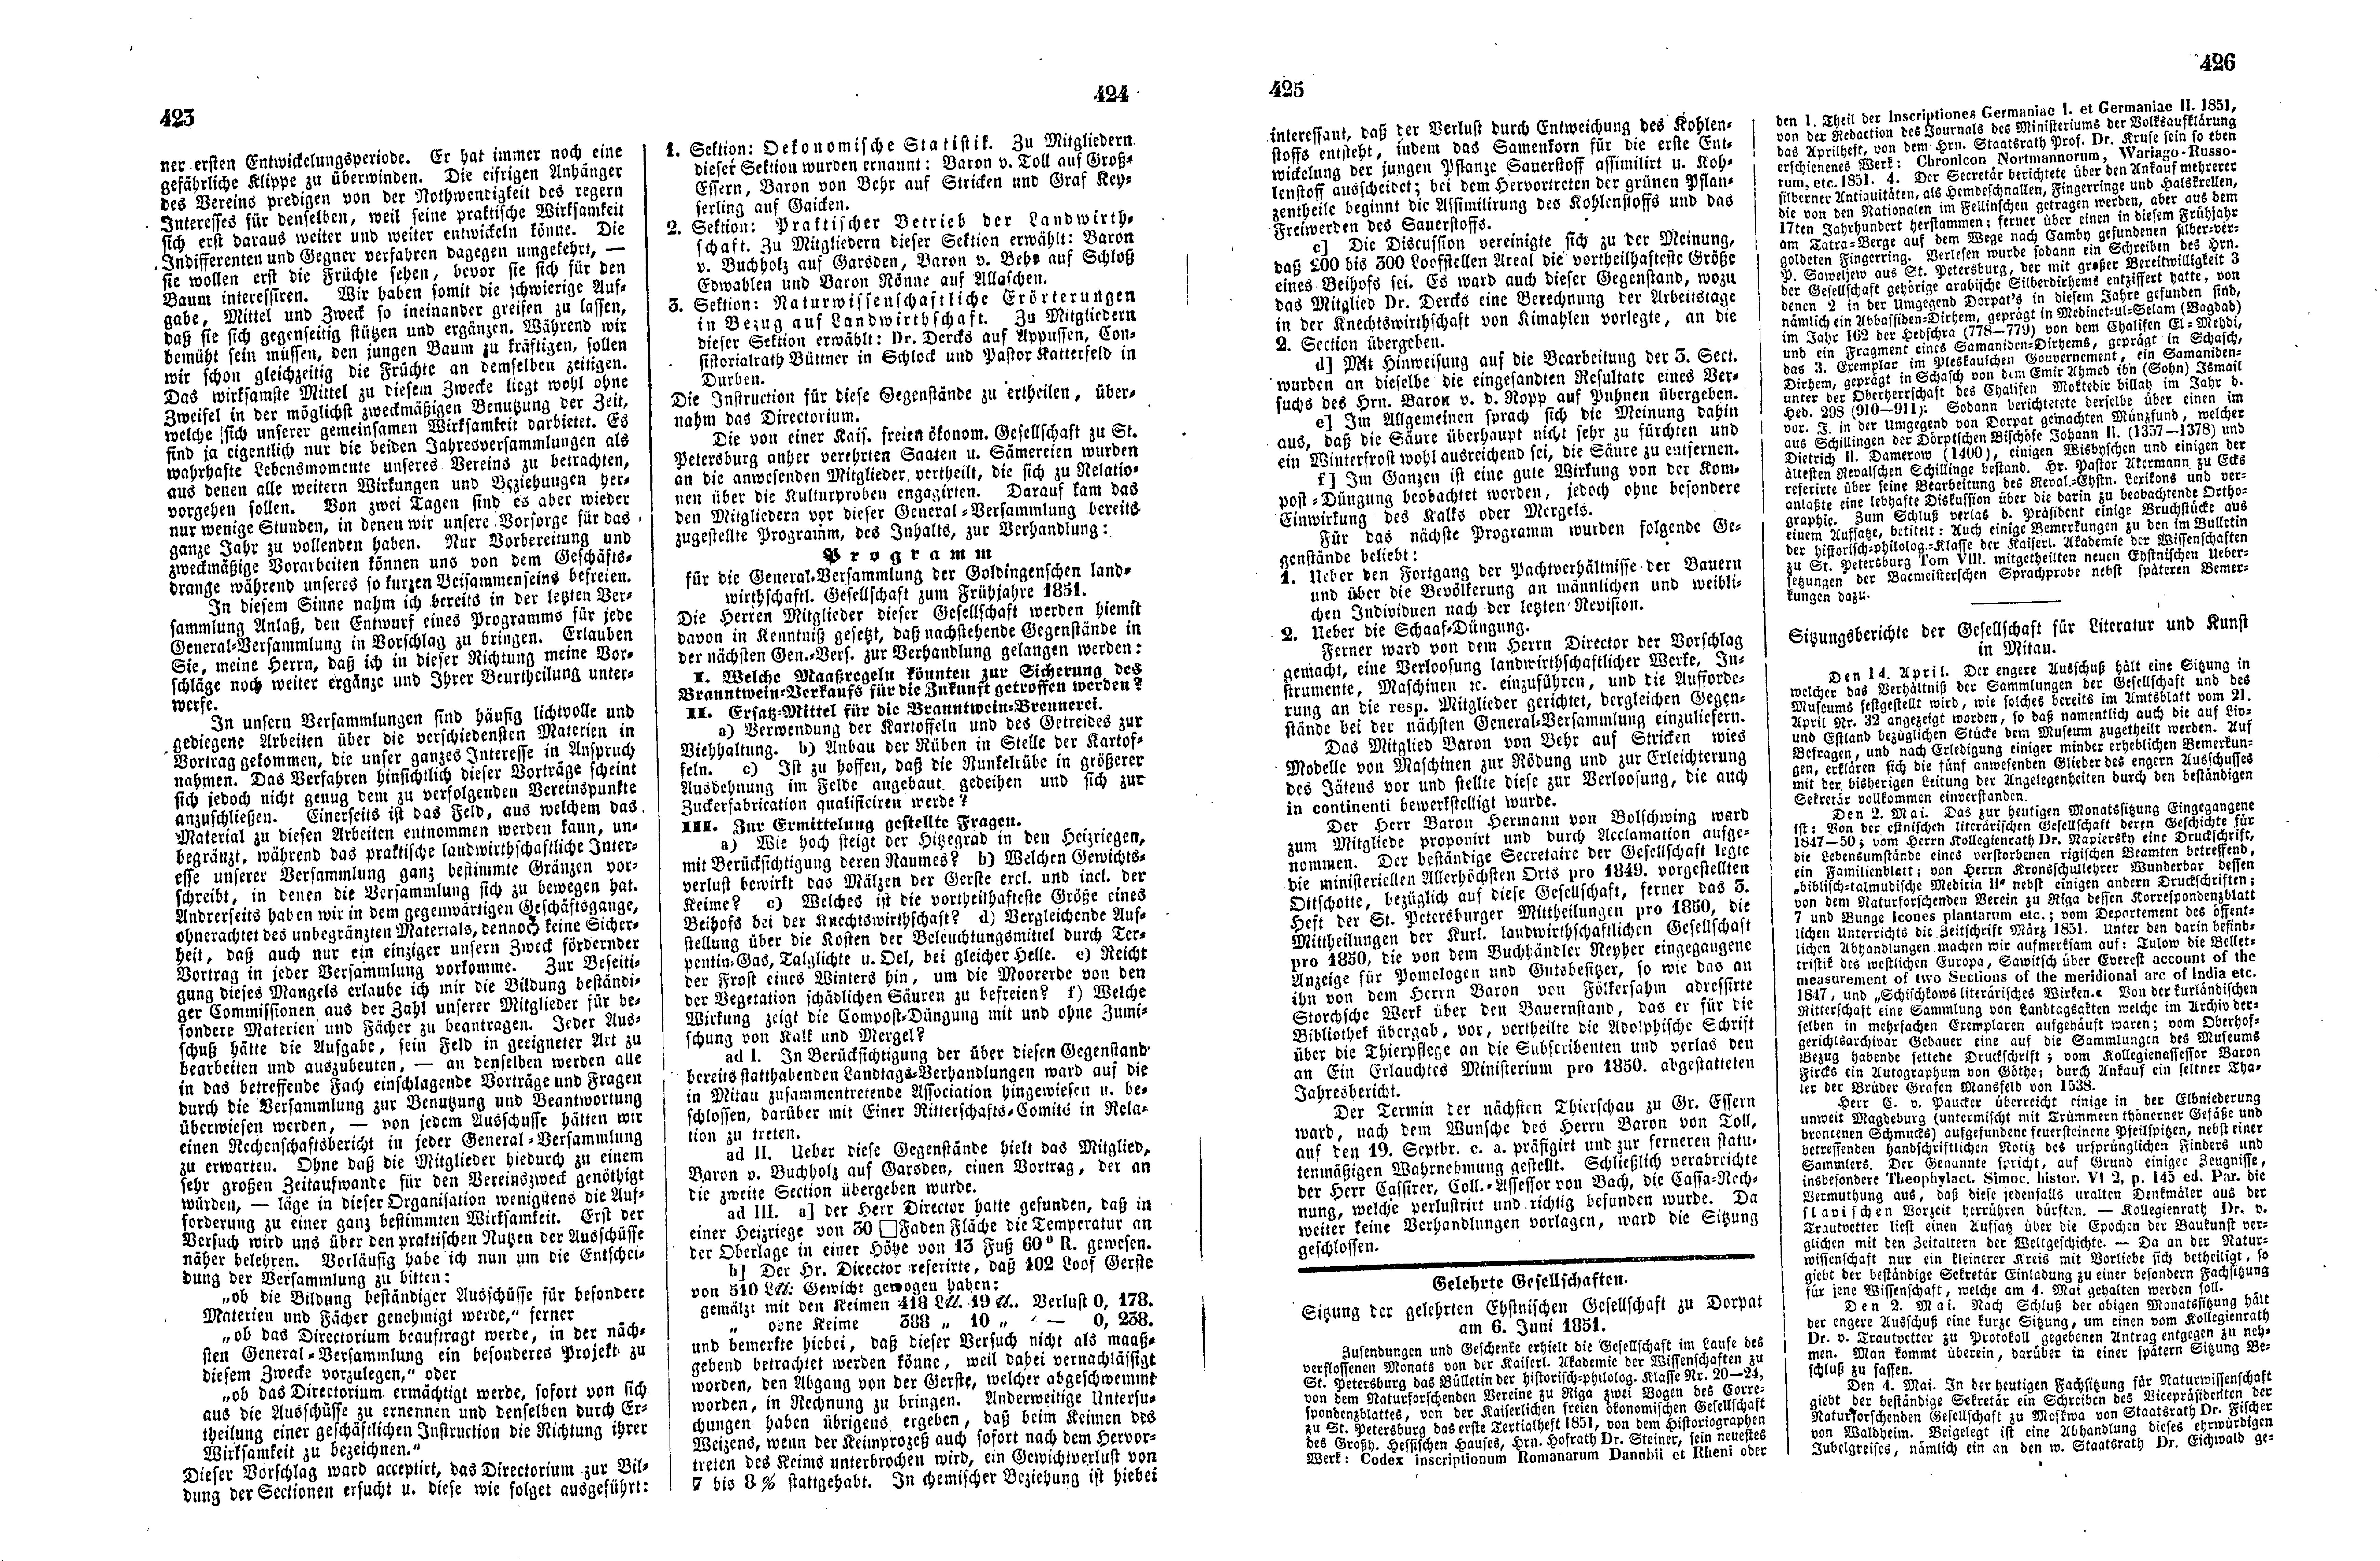 Das Inland [16] (1851) | 110. (423-426) Main body of text